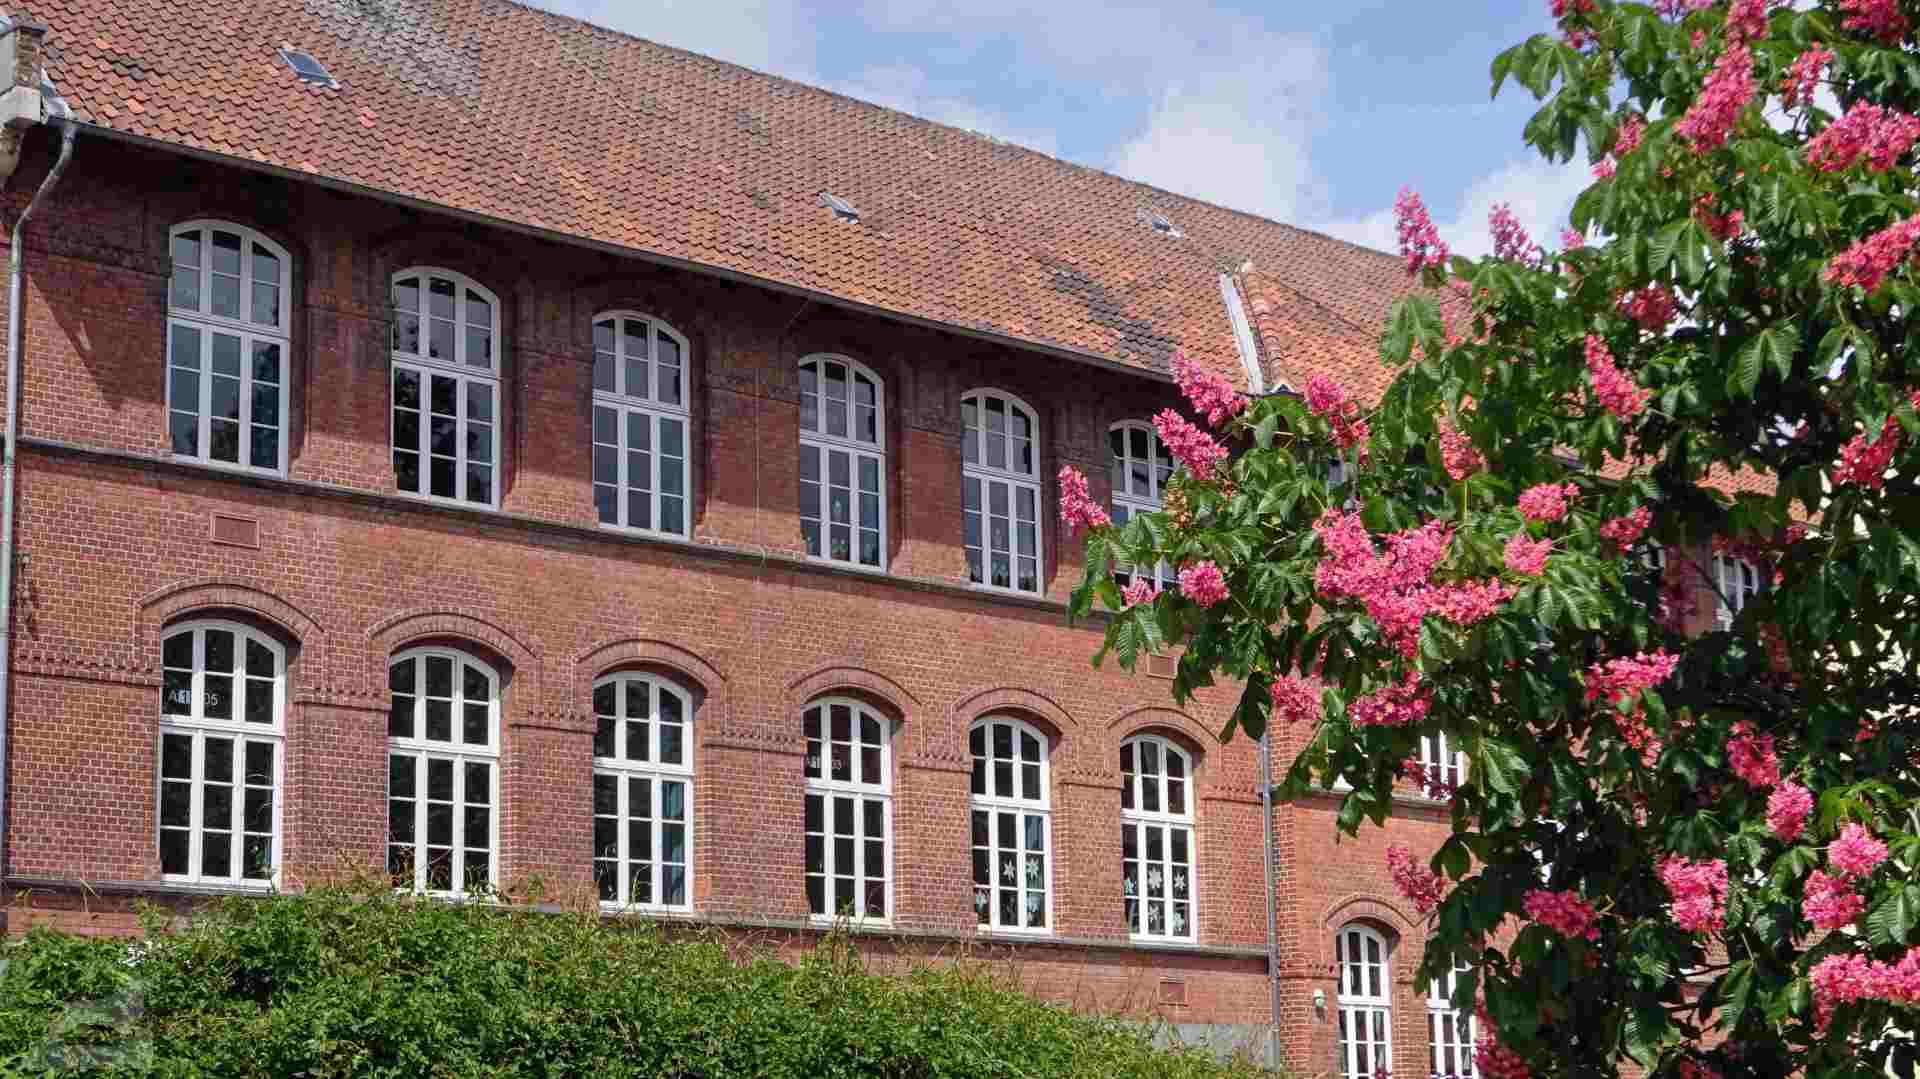 Edith-Stein-Schule (Georg-Ekert-Straße)